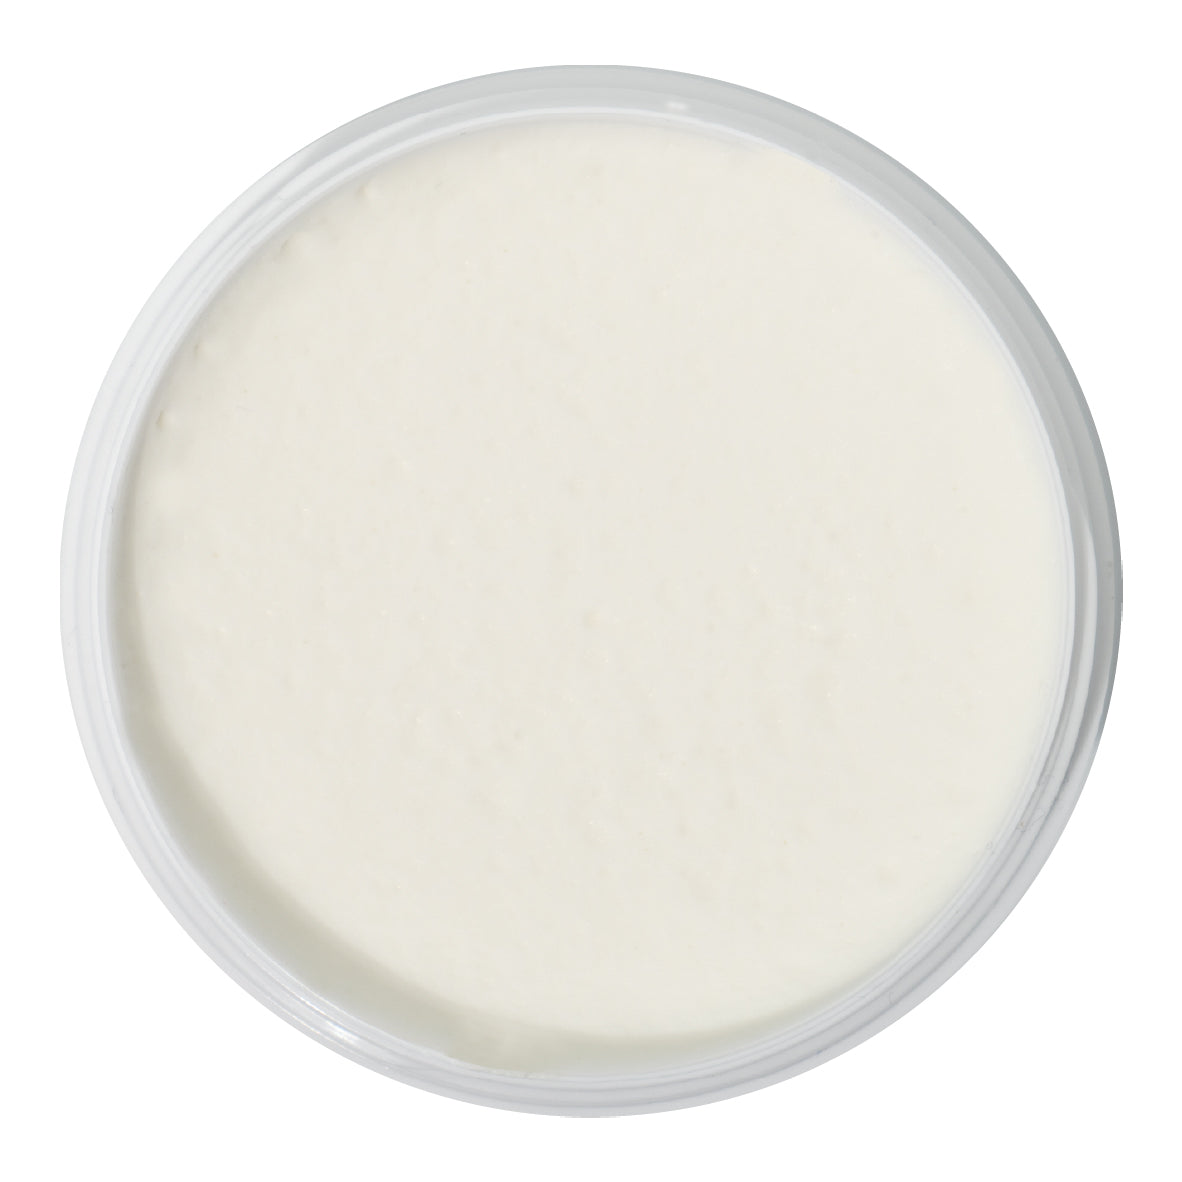 Uplifting Foot Cream | Lemongrass & Mint | White Label Skincare